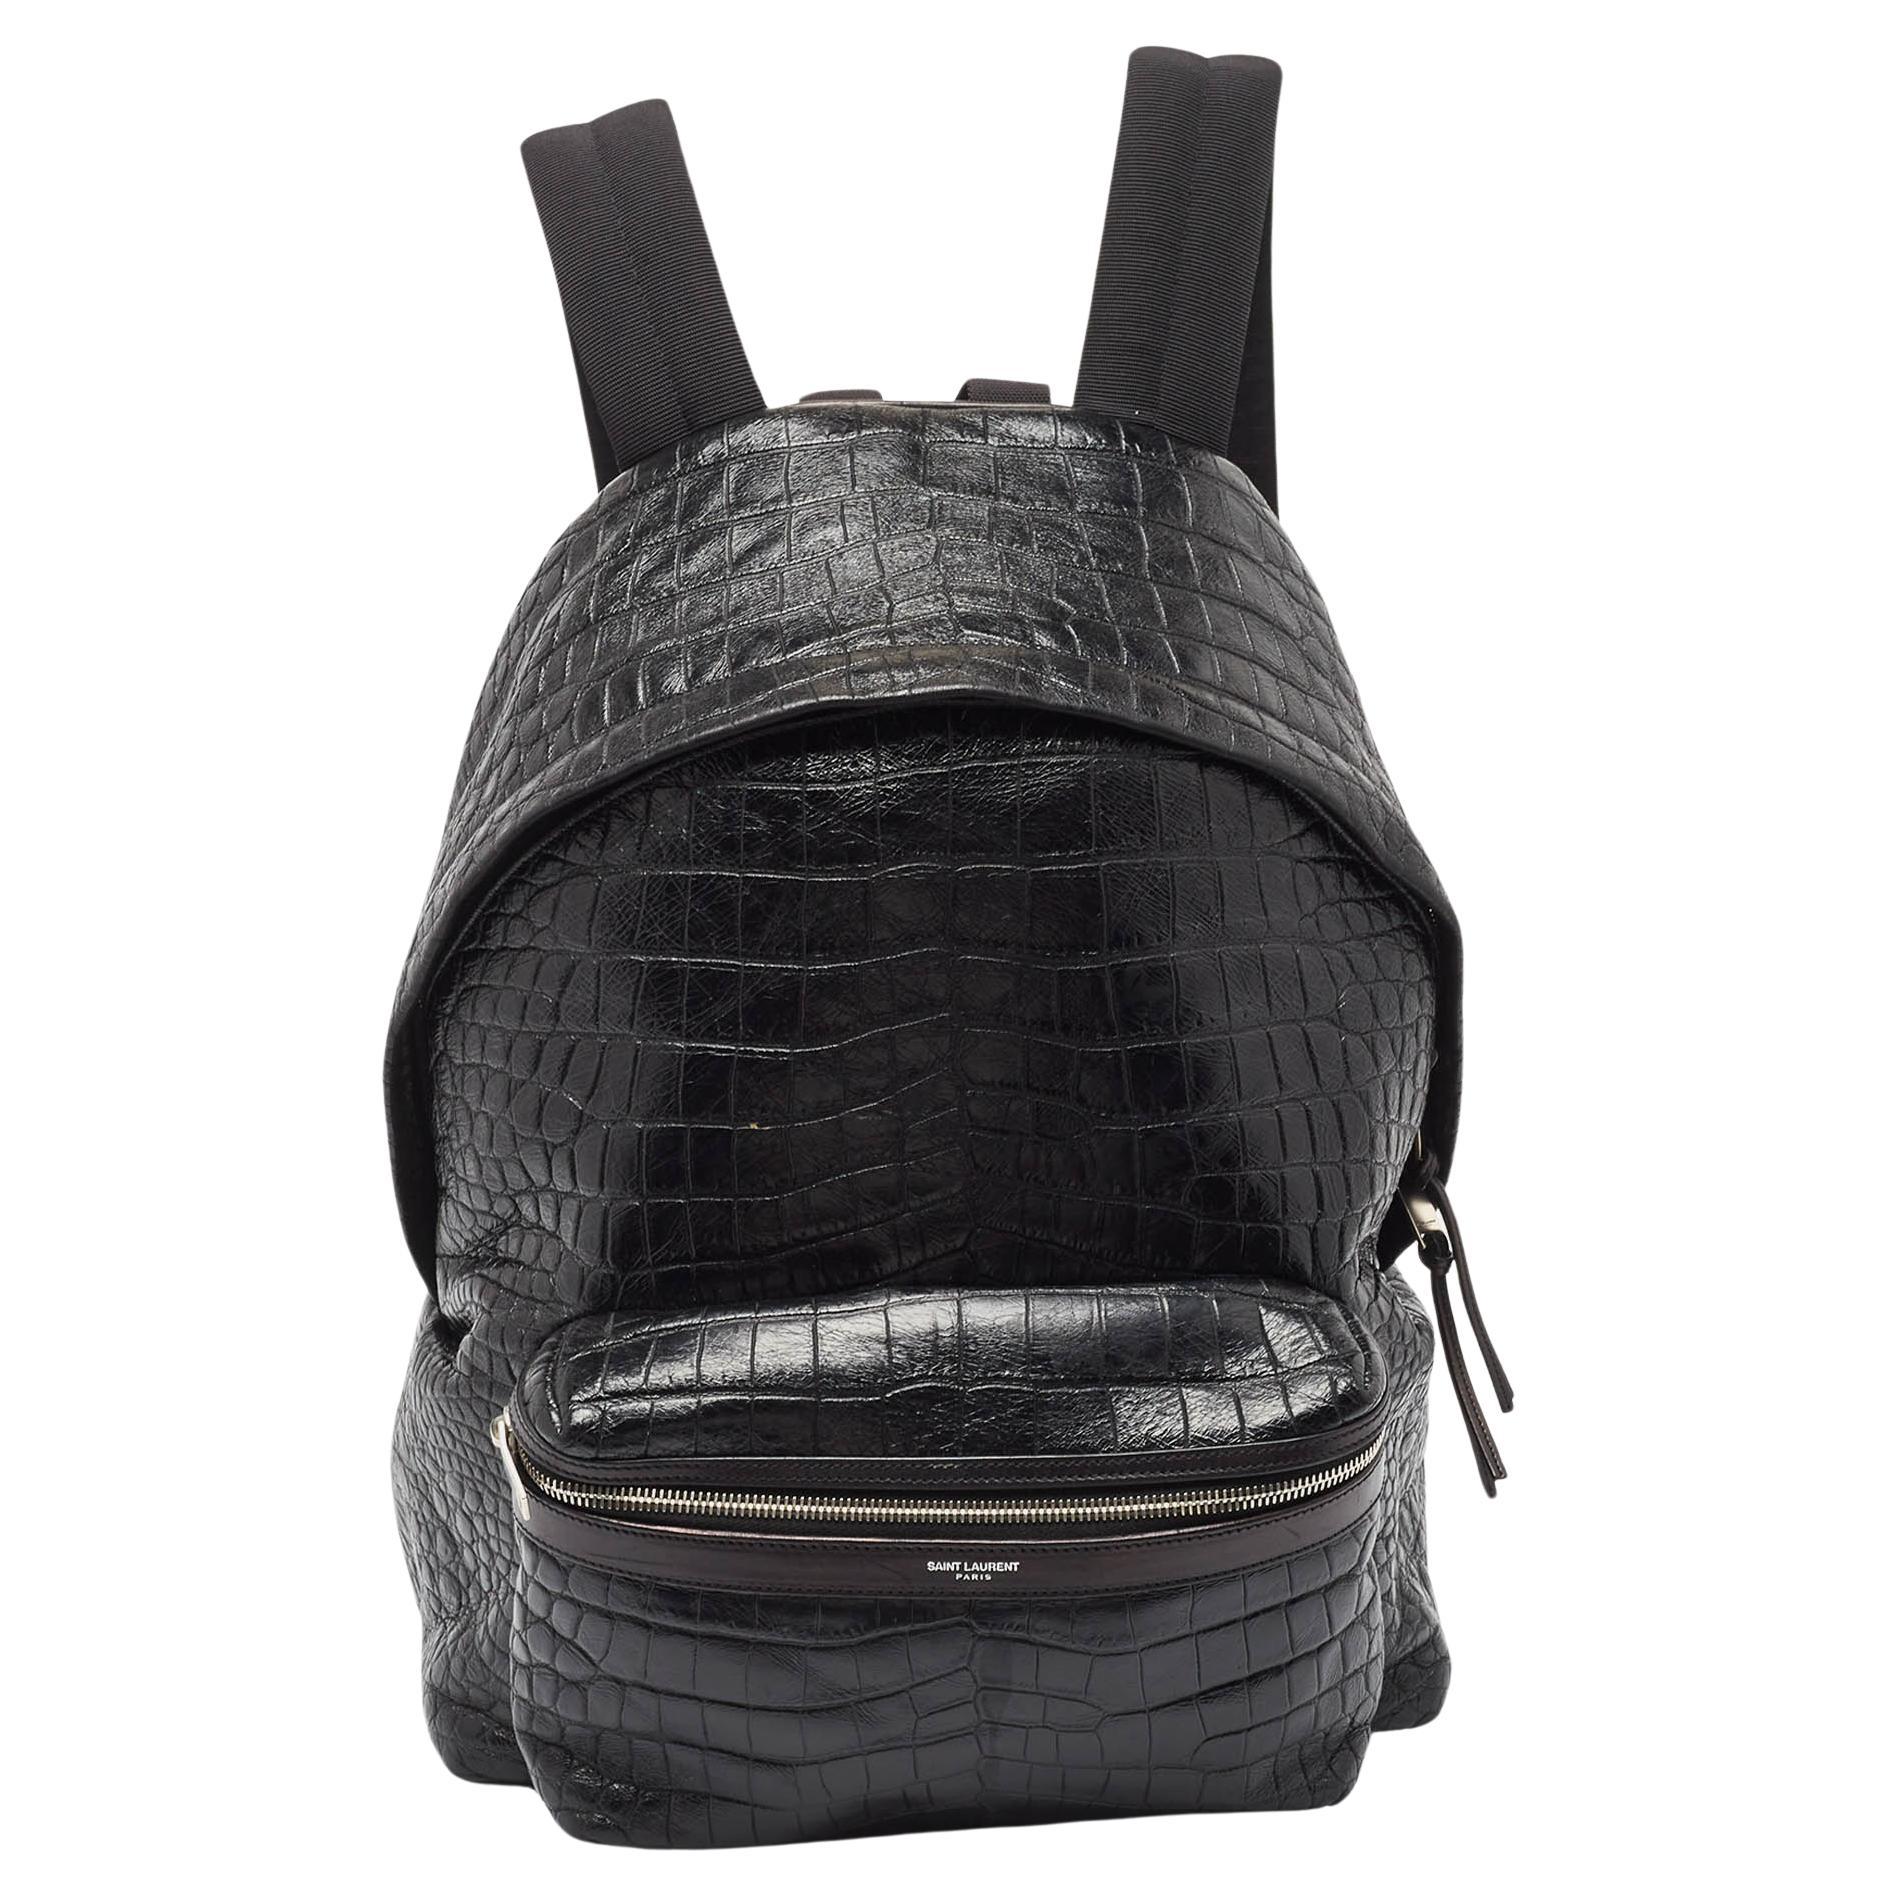  Saint Laurent Black Croc Embossed Leather City Backpack